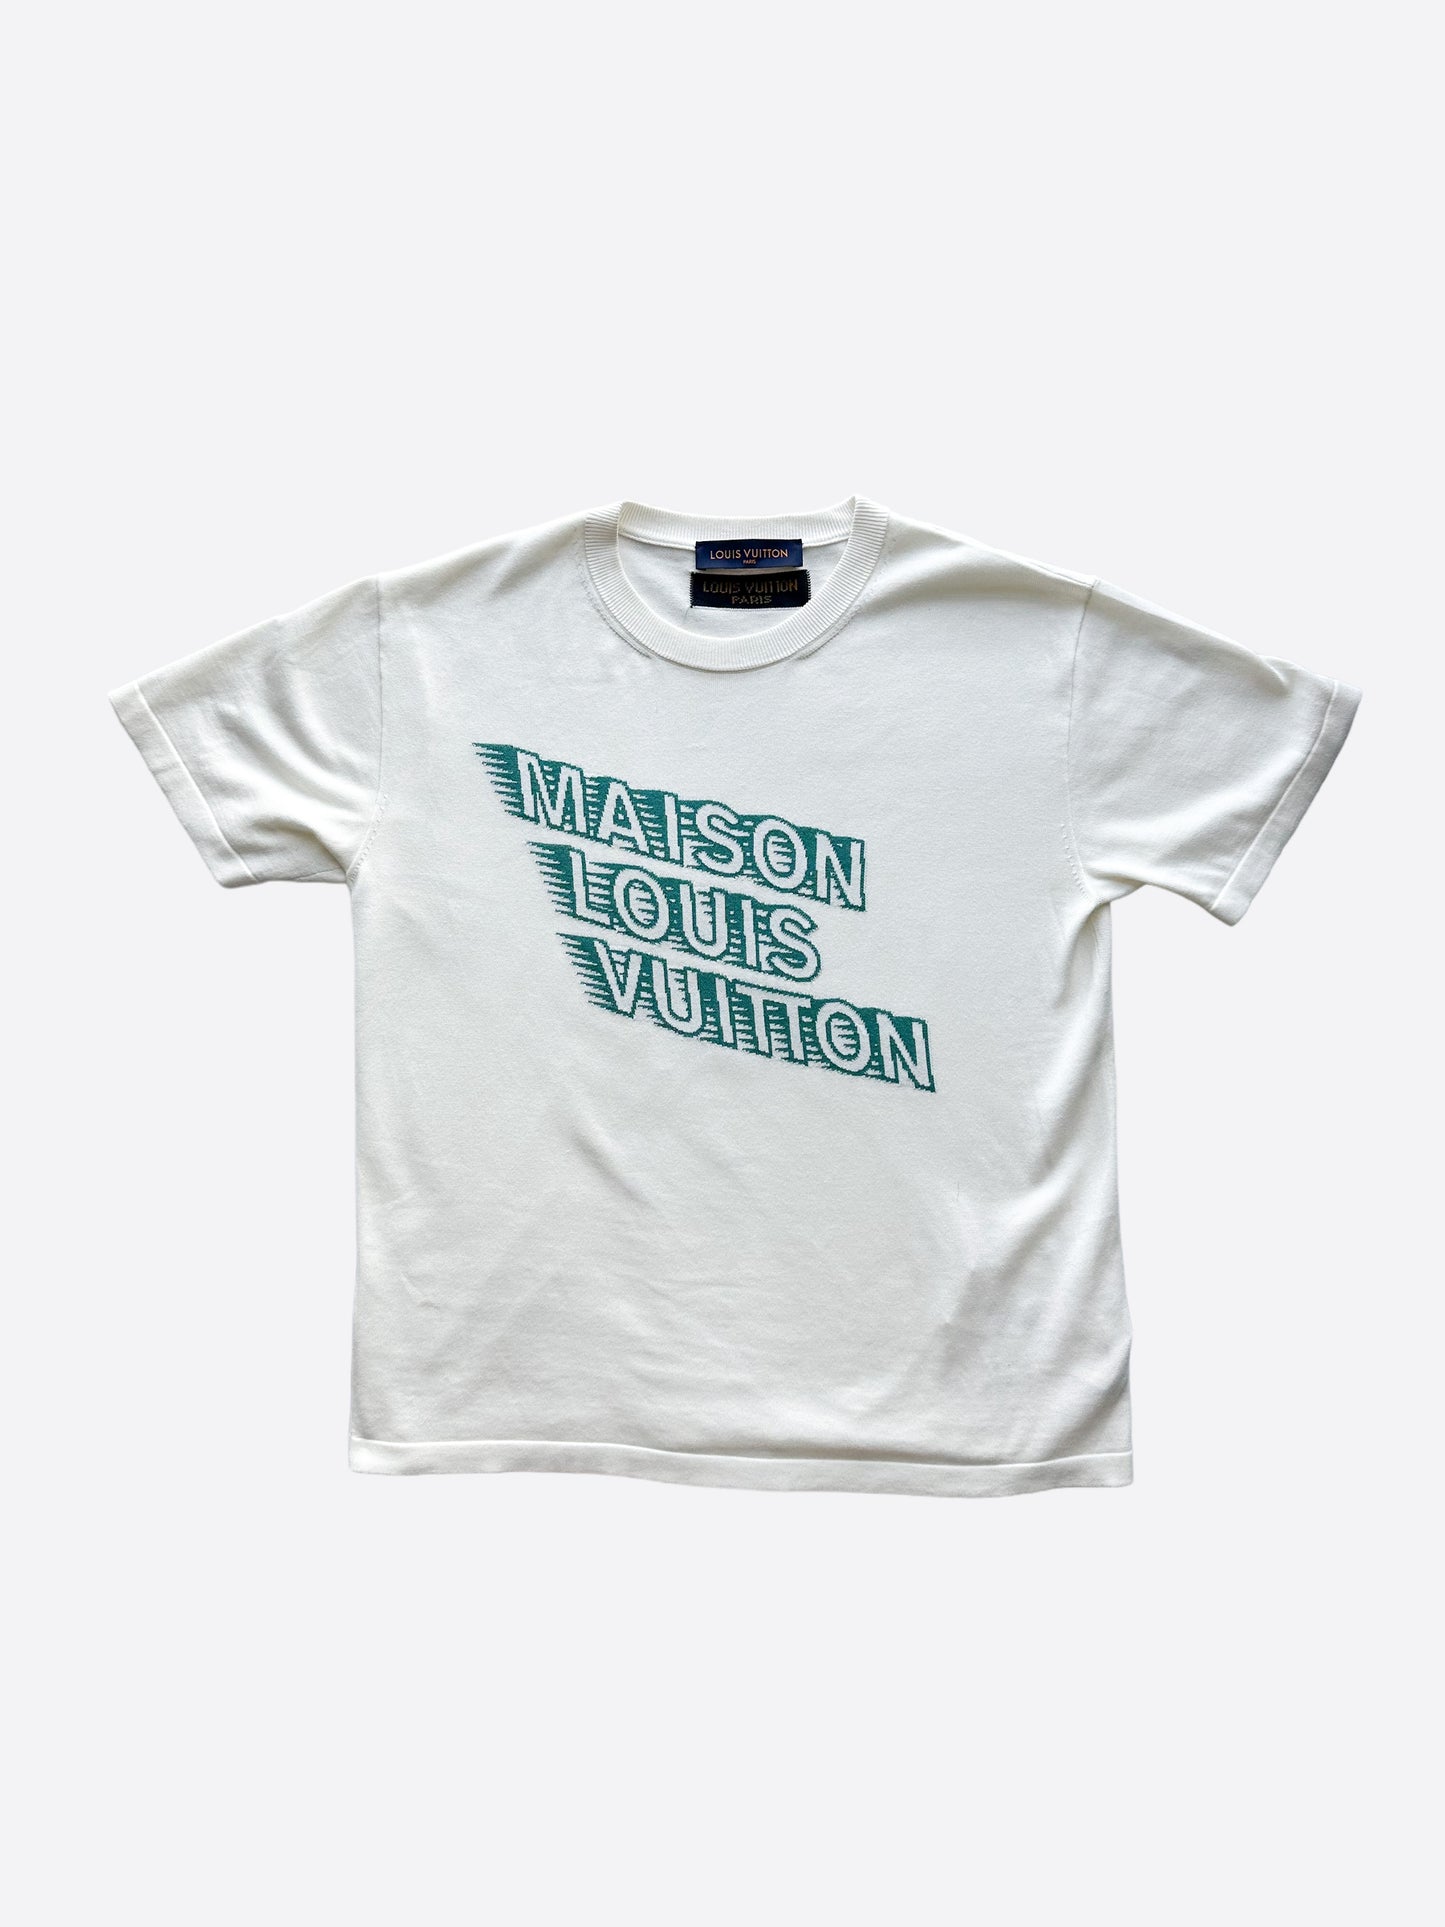 Louis Vuitton white Printed Graphic T-Shirt